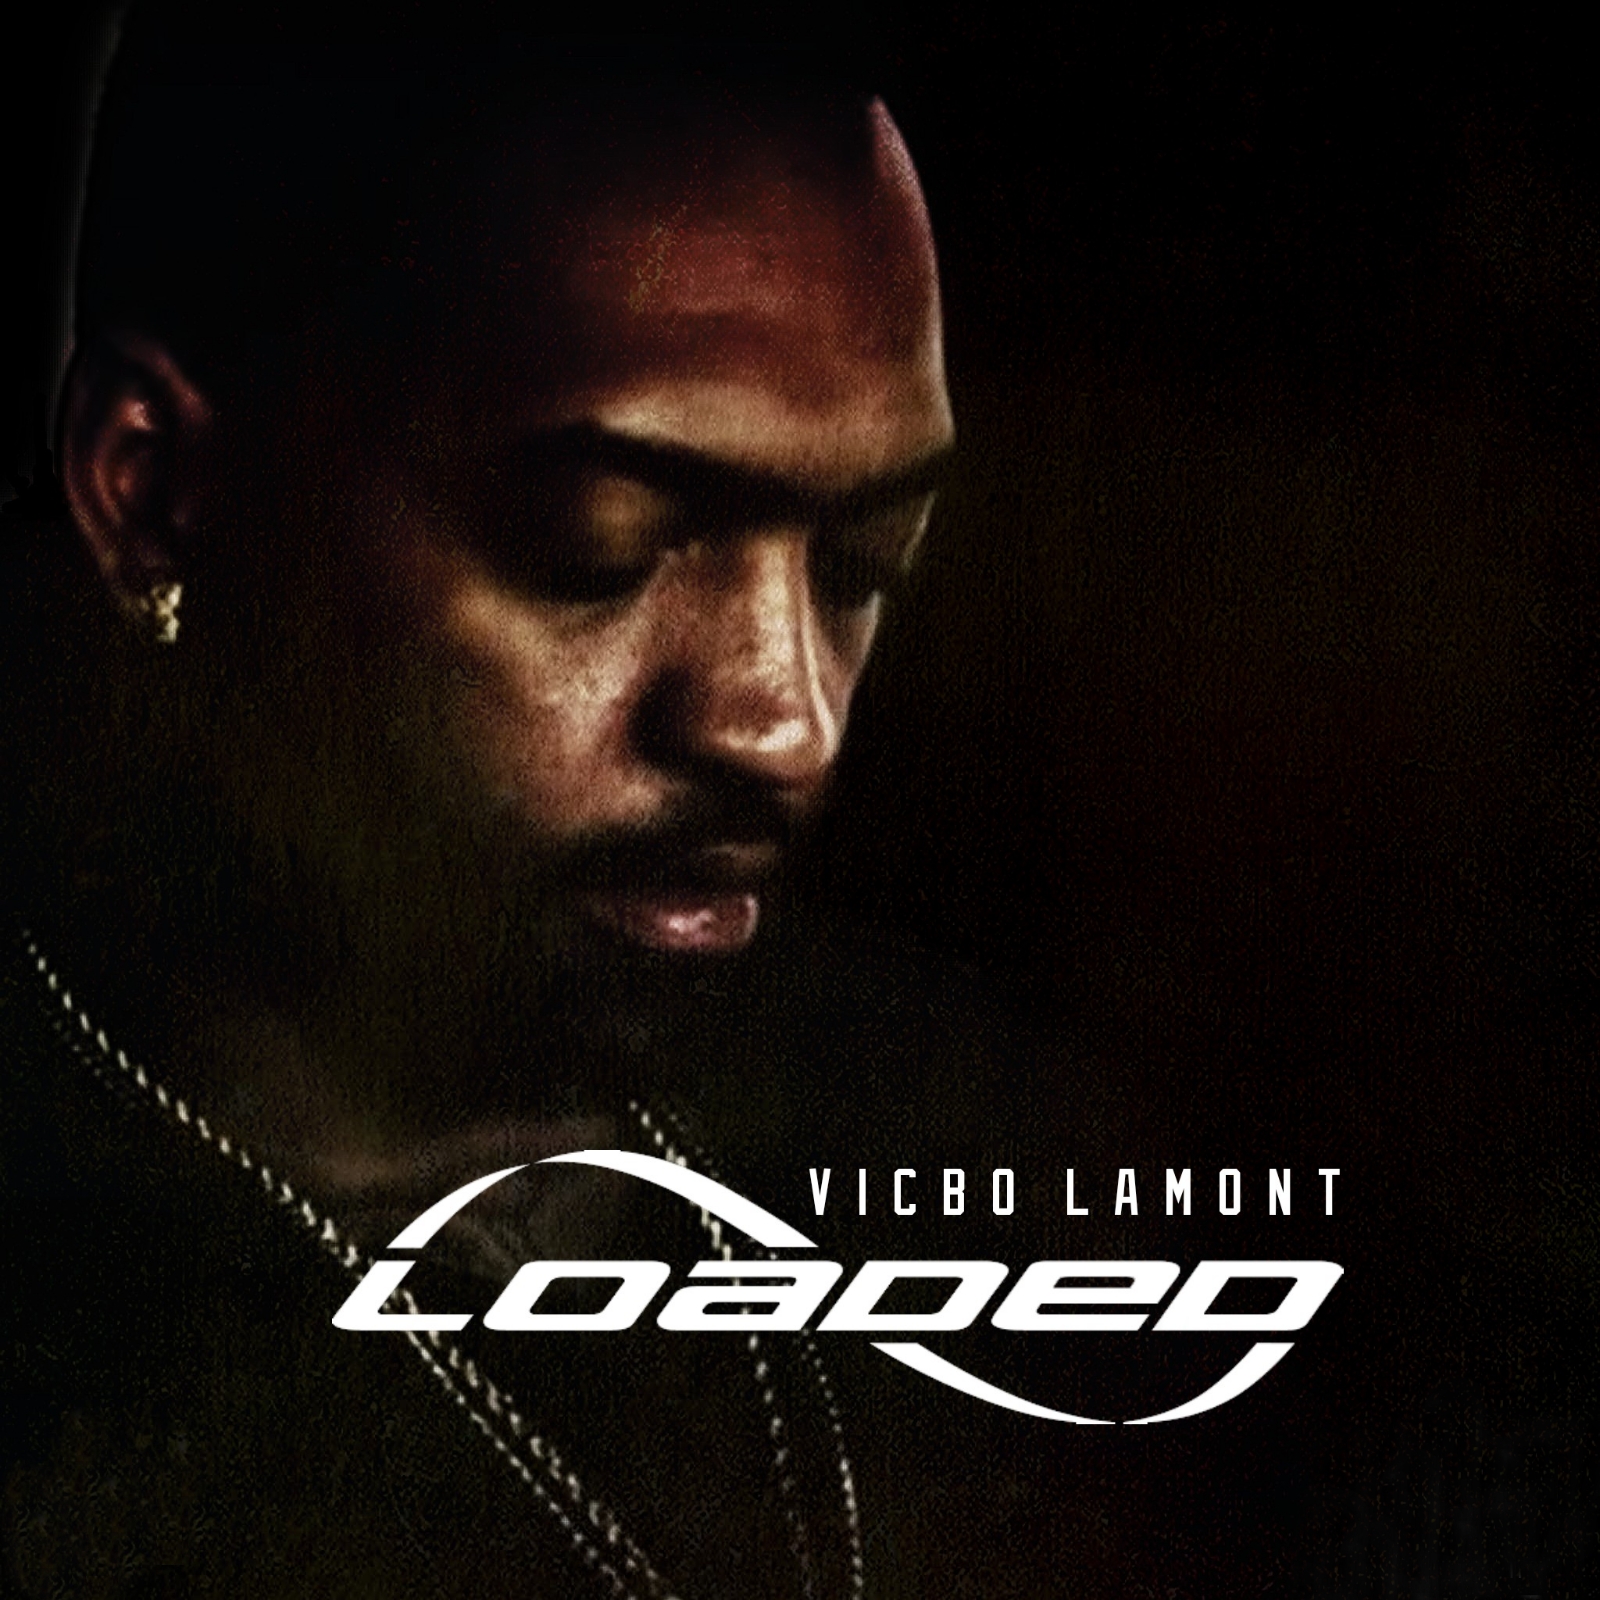 [NEW MUSIC] VicBo Lamont – Loaded @Bo4ElPresidente